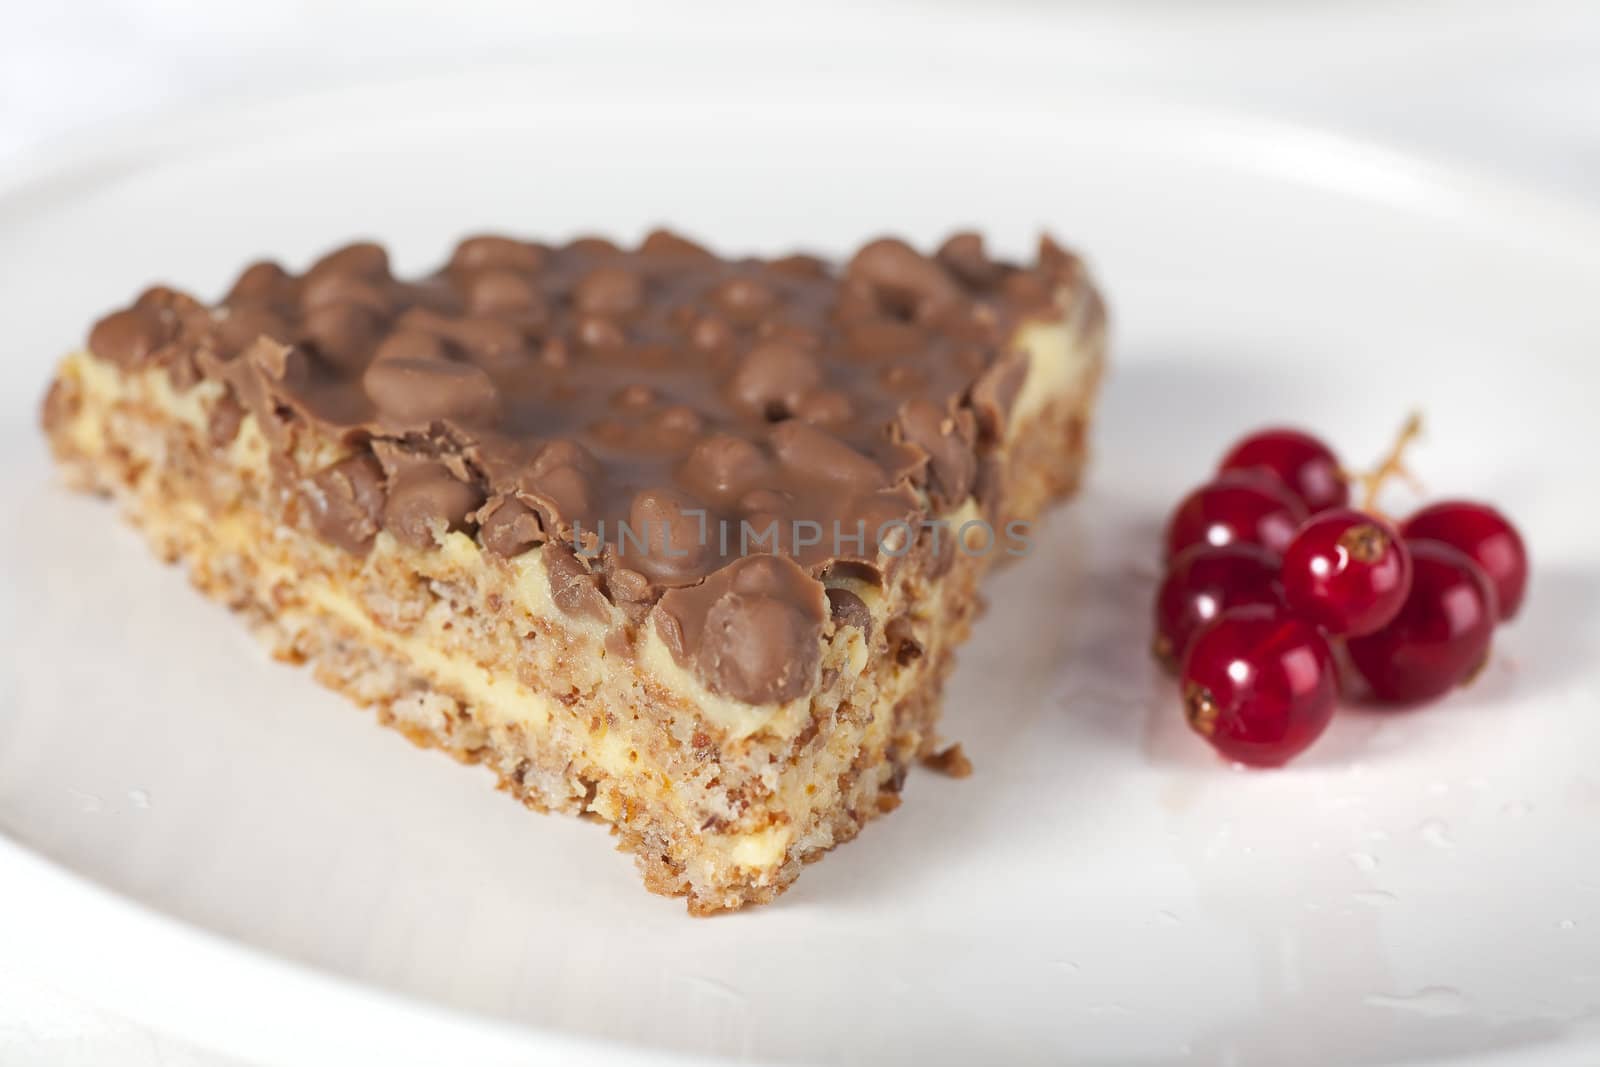 Chocolate Almond Cake by charlotteLake